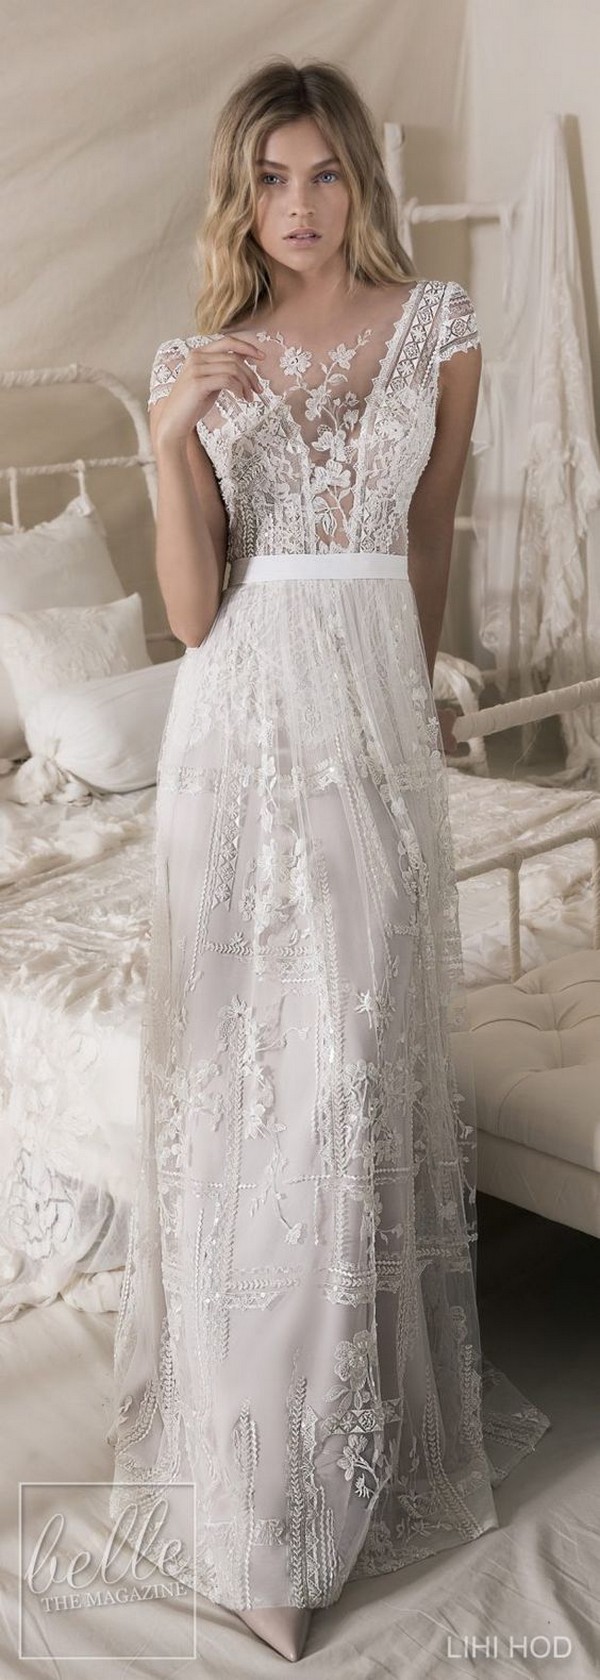 Lihi Hod vintage lace wedding dress with cap sleeves